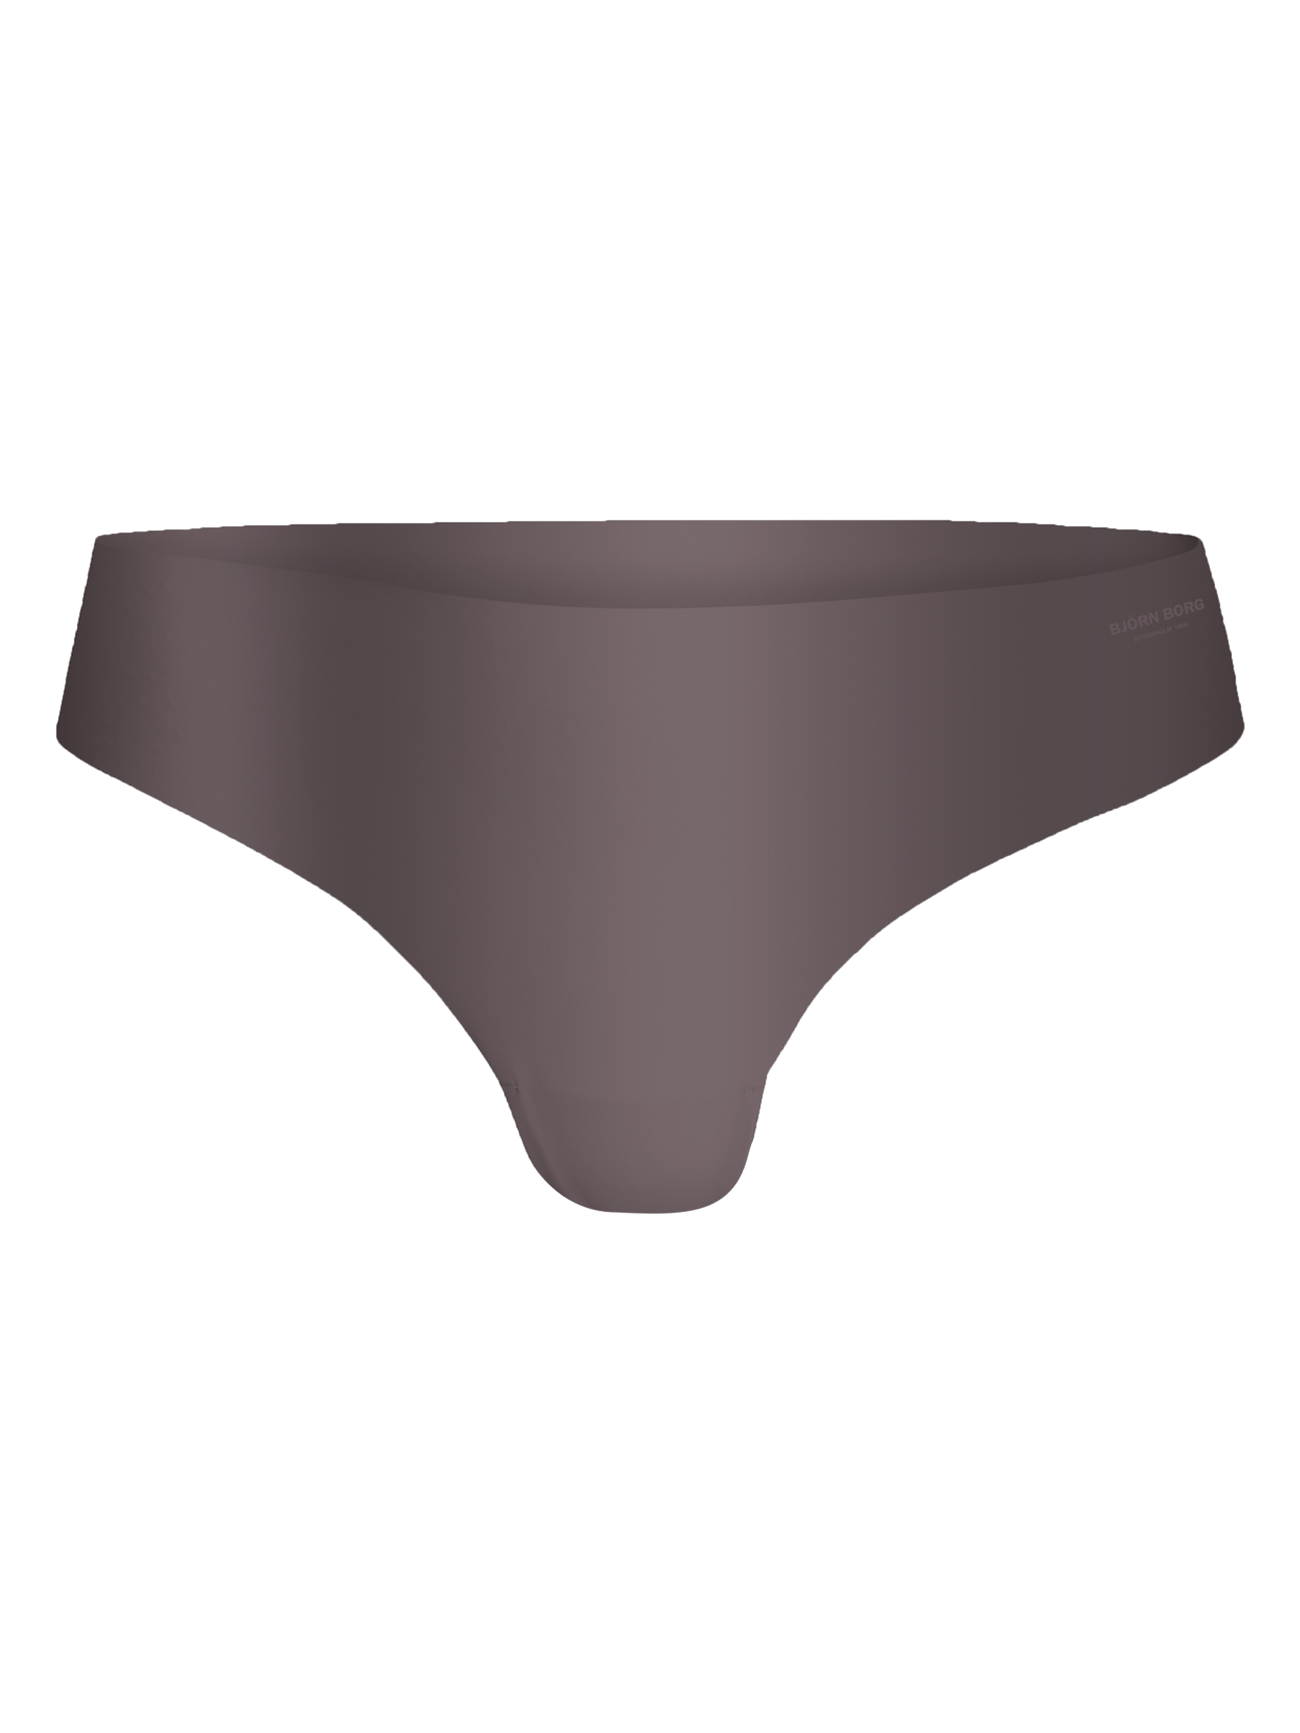 US Stock Men's Seamless Underwear Invisible No Show Thong And Brief Sexy  Bikini